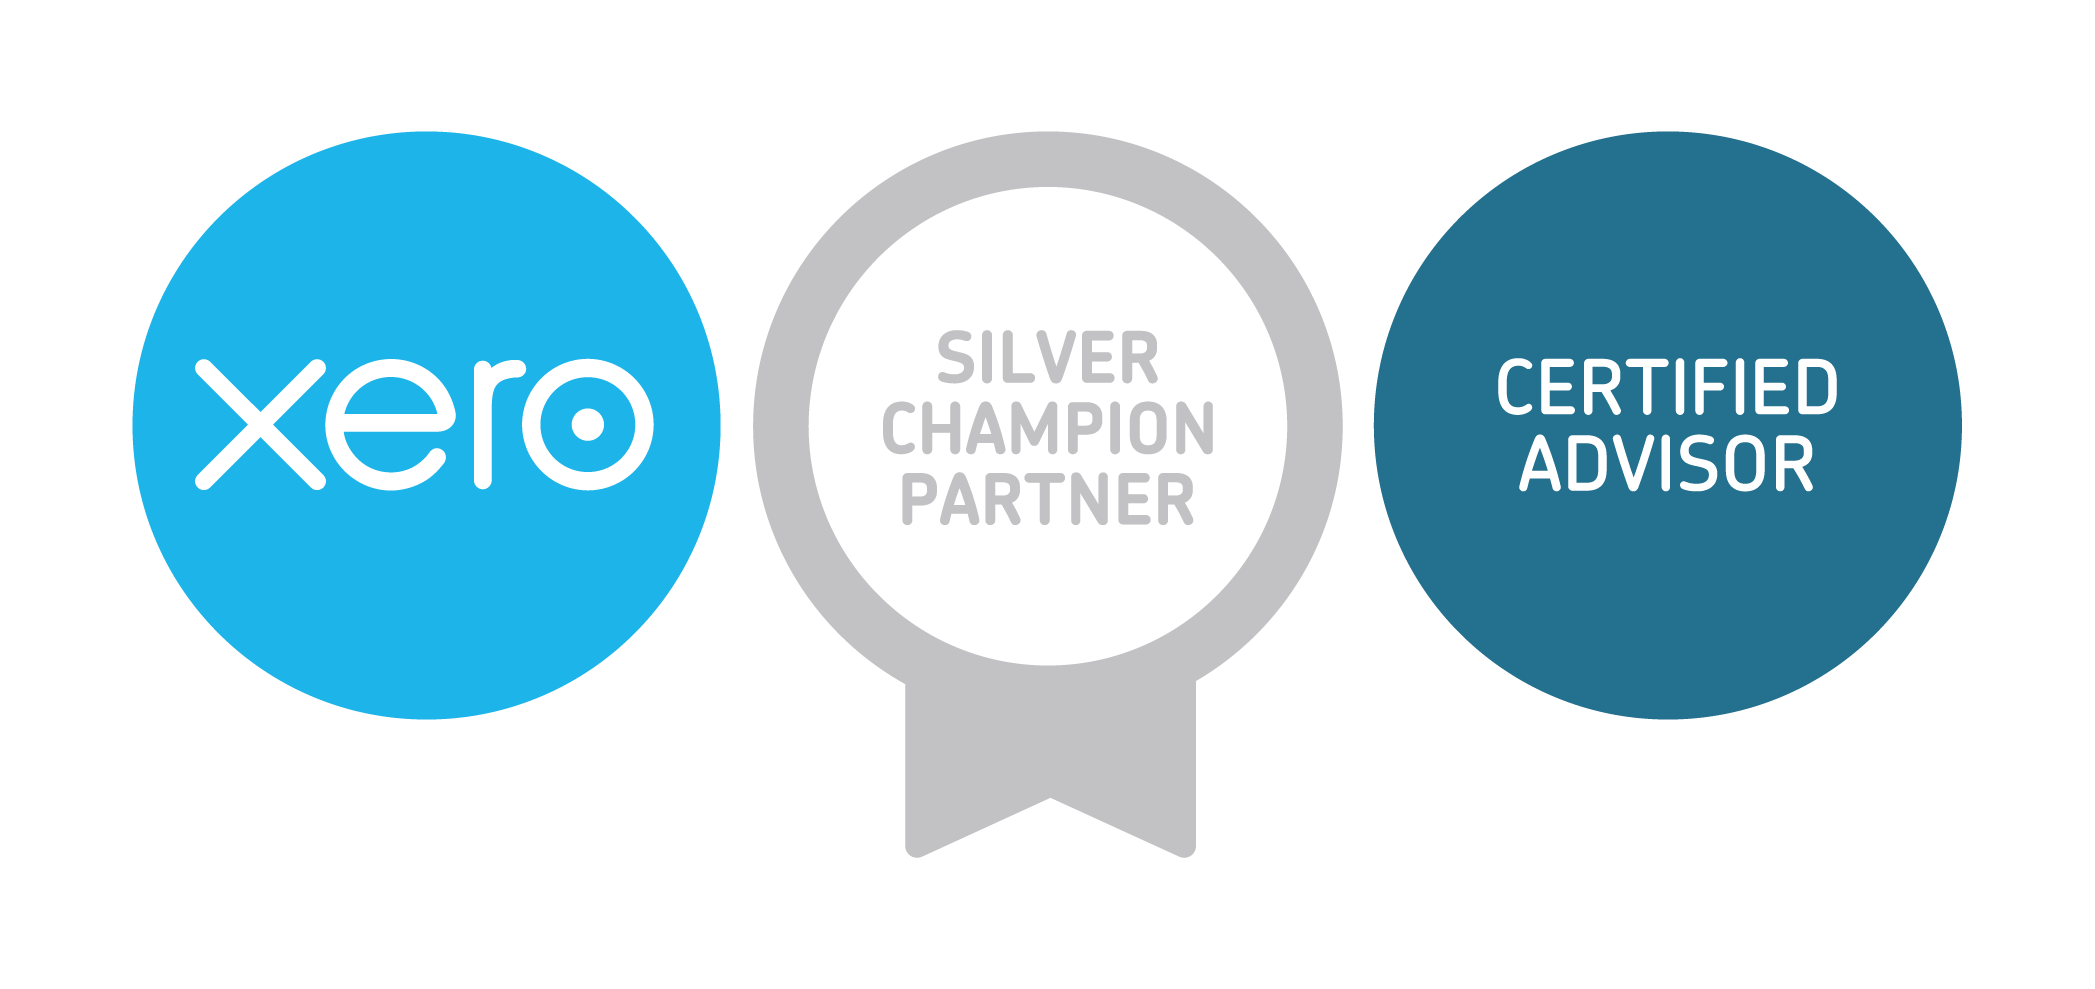 xero-silver-champion-partner + cert-advisor-badges-RGB.png